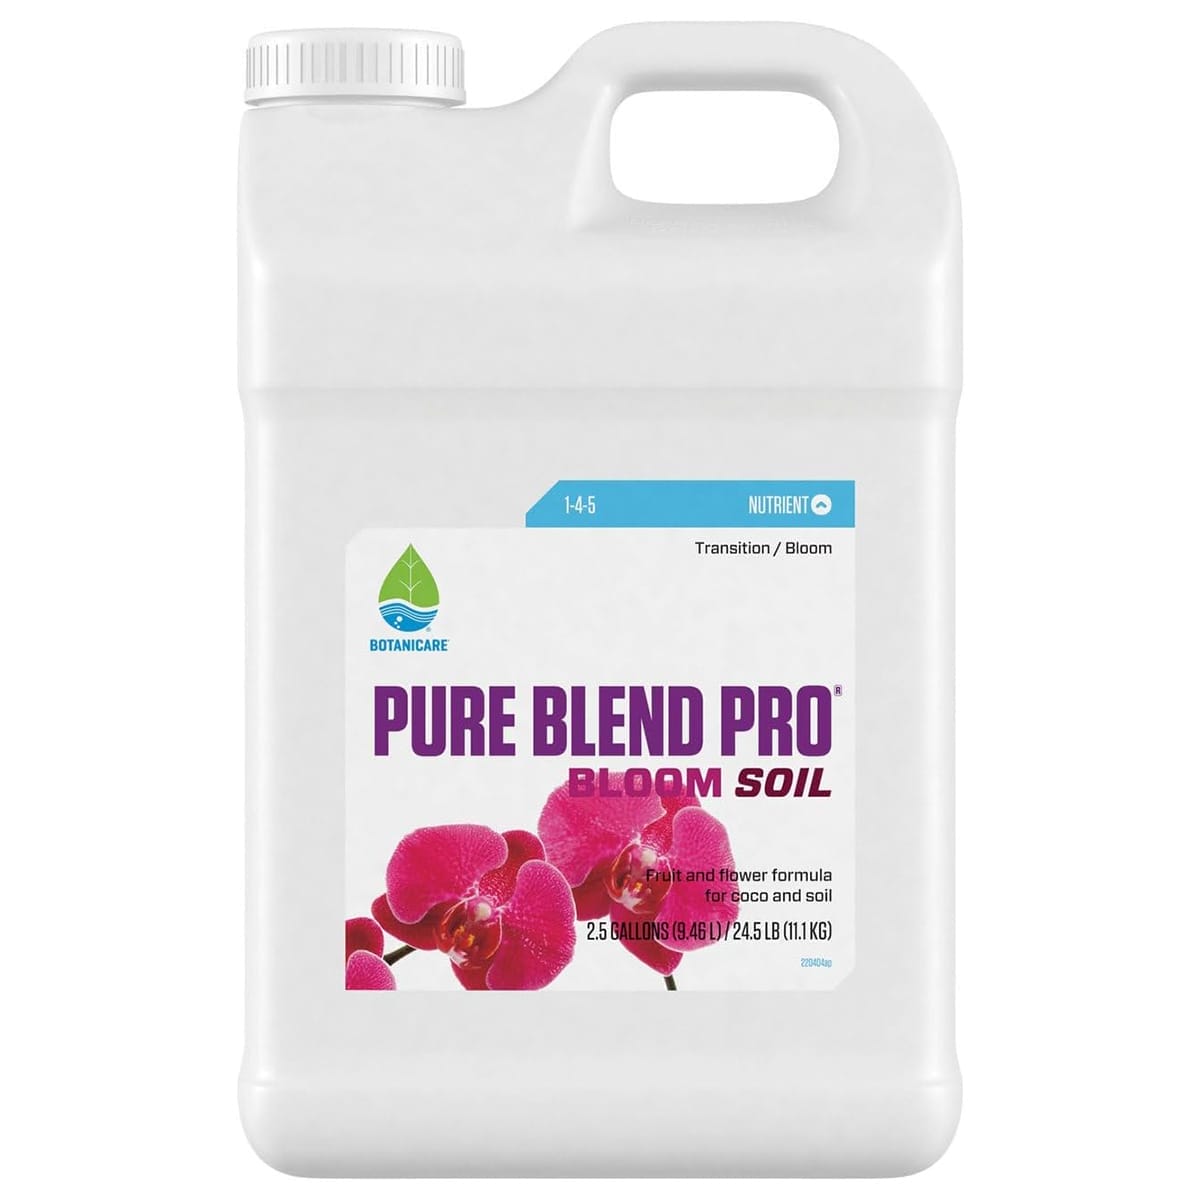 Pure Blend Pro Bloom Soil 2.5 Gallon